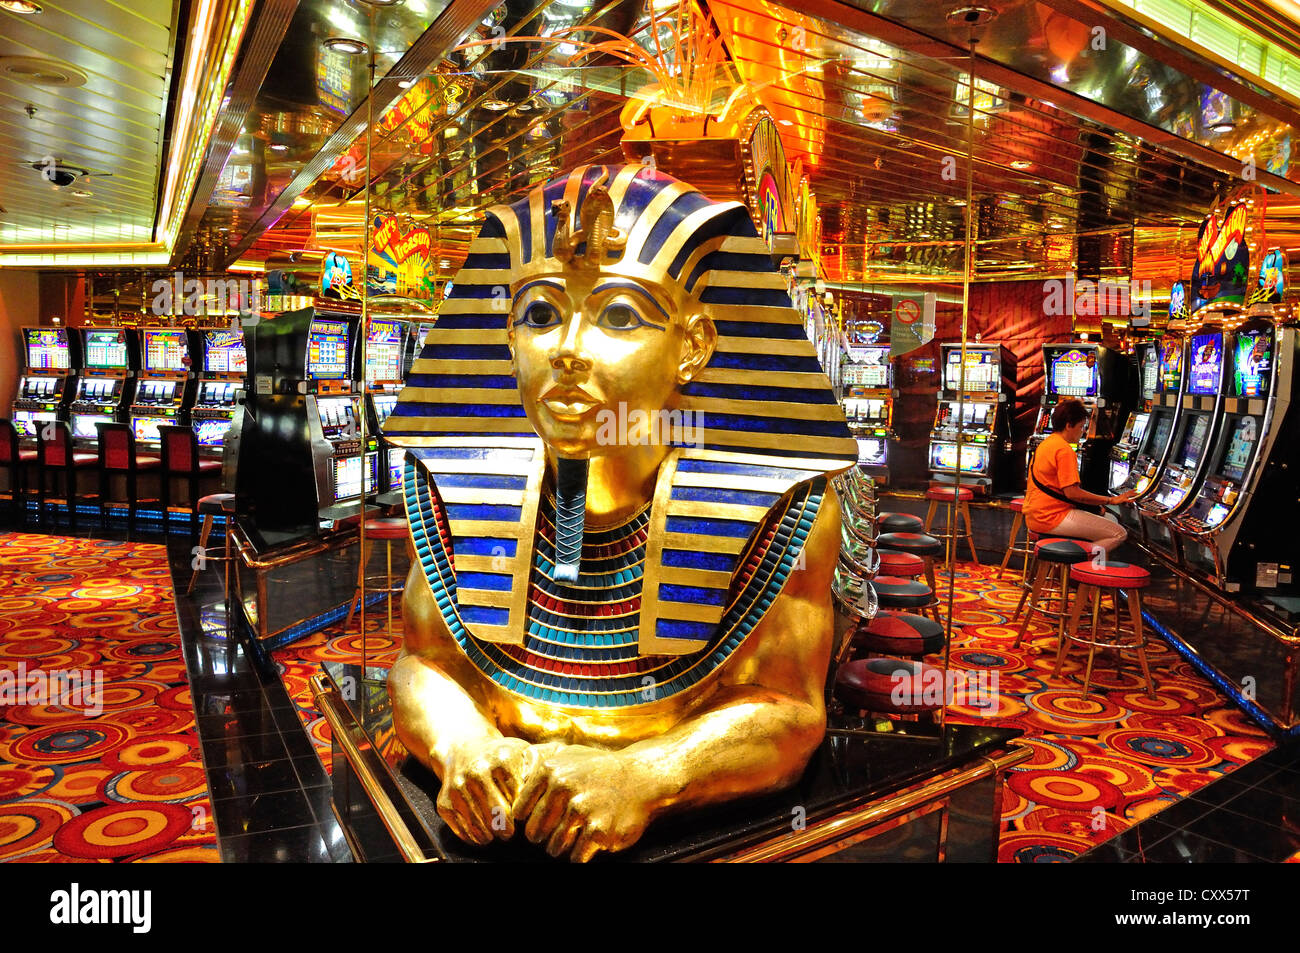 "Tal der Könige" Spielautomaten im Casino-on-Board-Royal Caribbean "Grandeur of the Seas" Kreuzfahrt Schiff, Mittelmeer, Europa Stockfoto